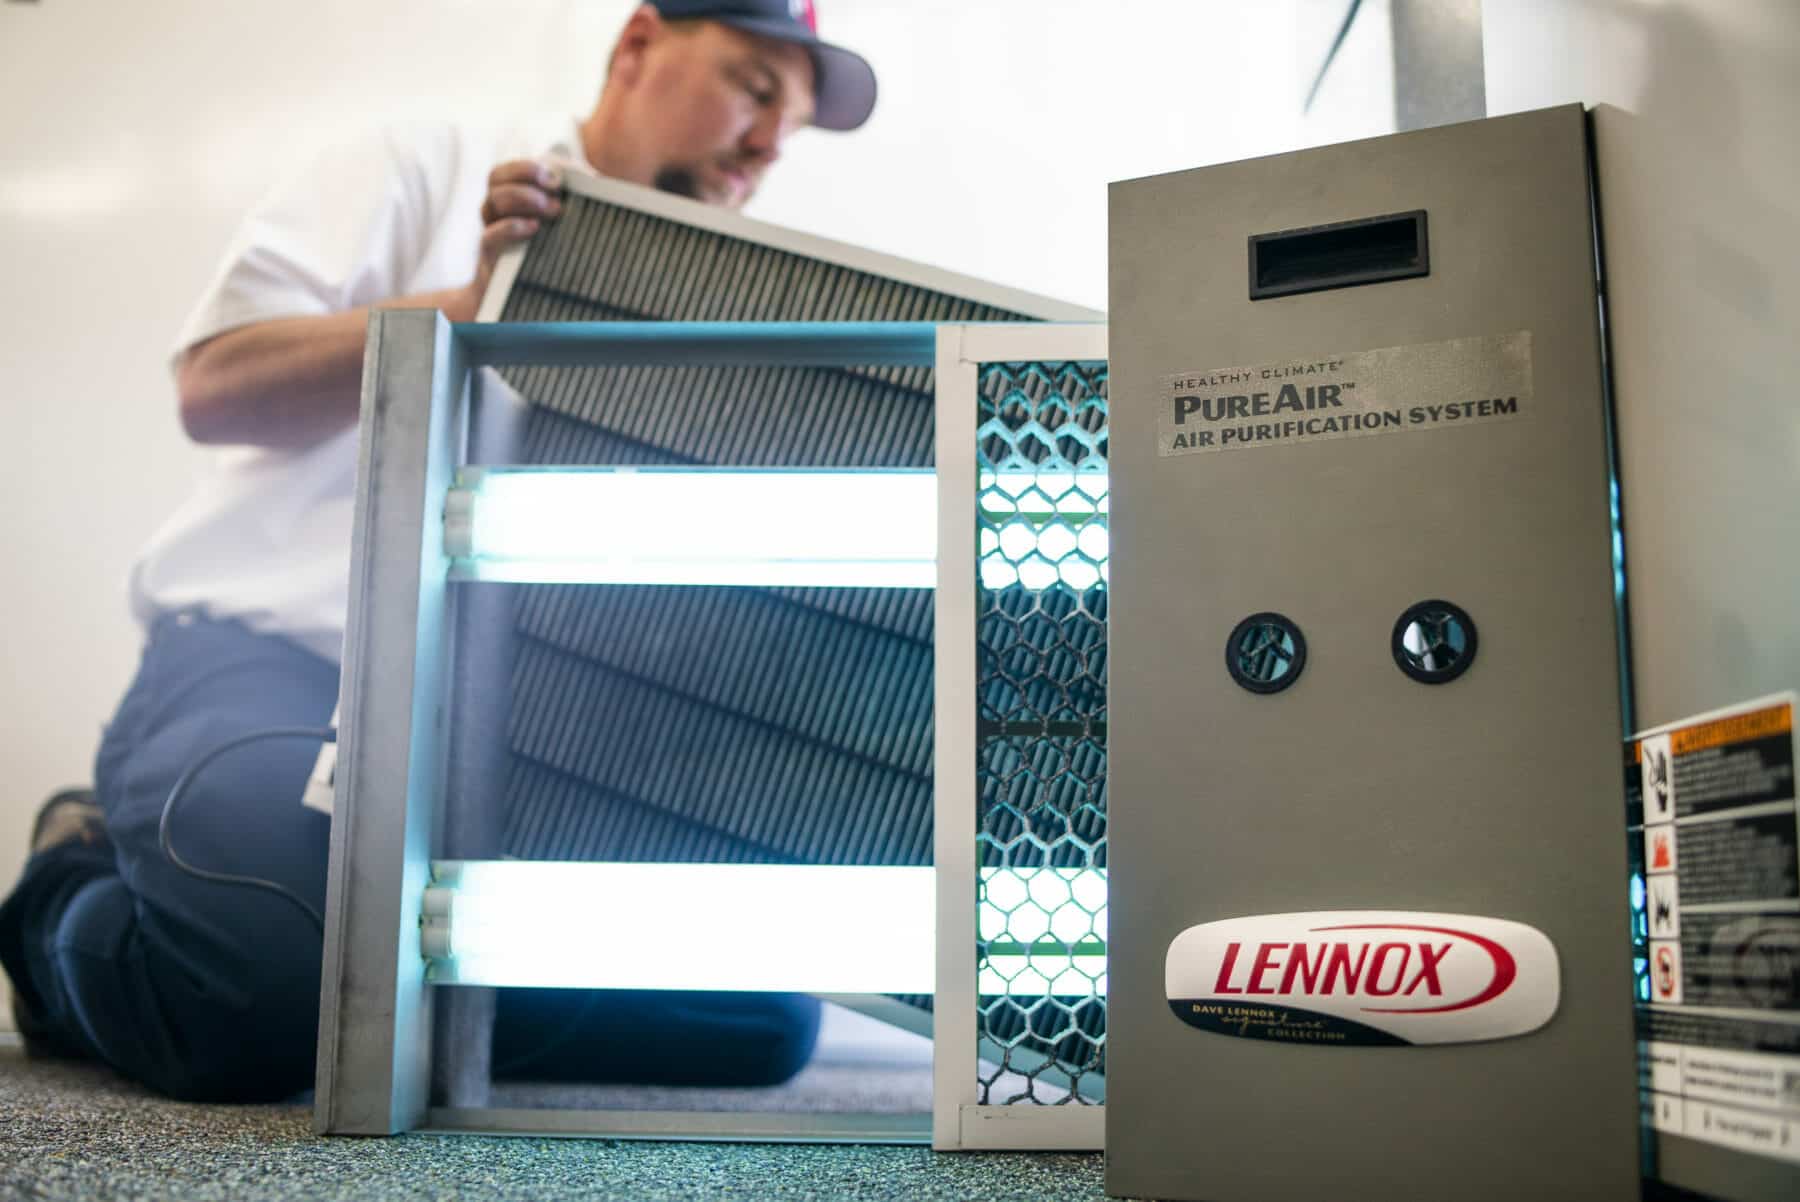 Lennox Air Purification System